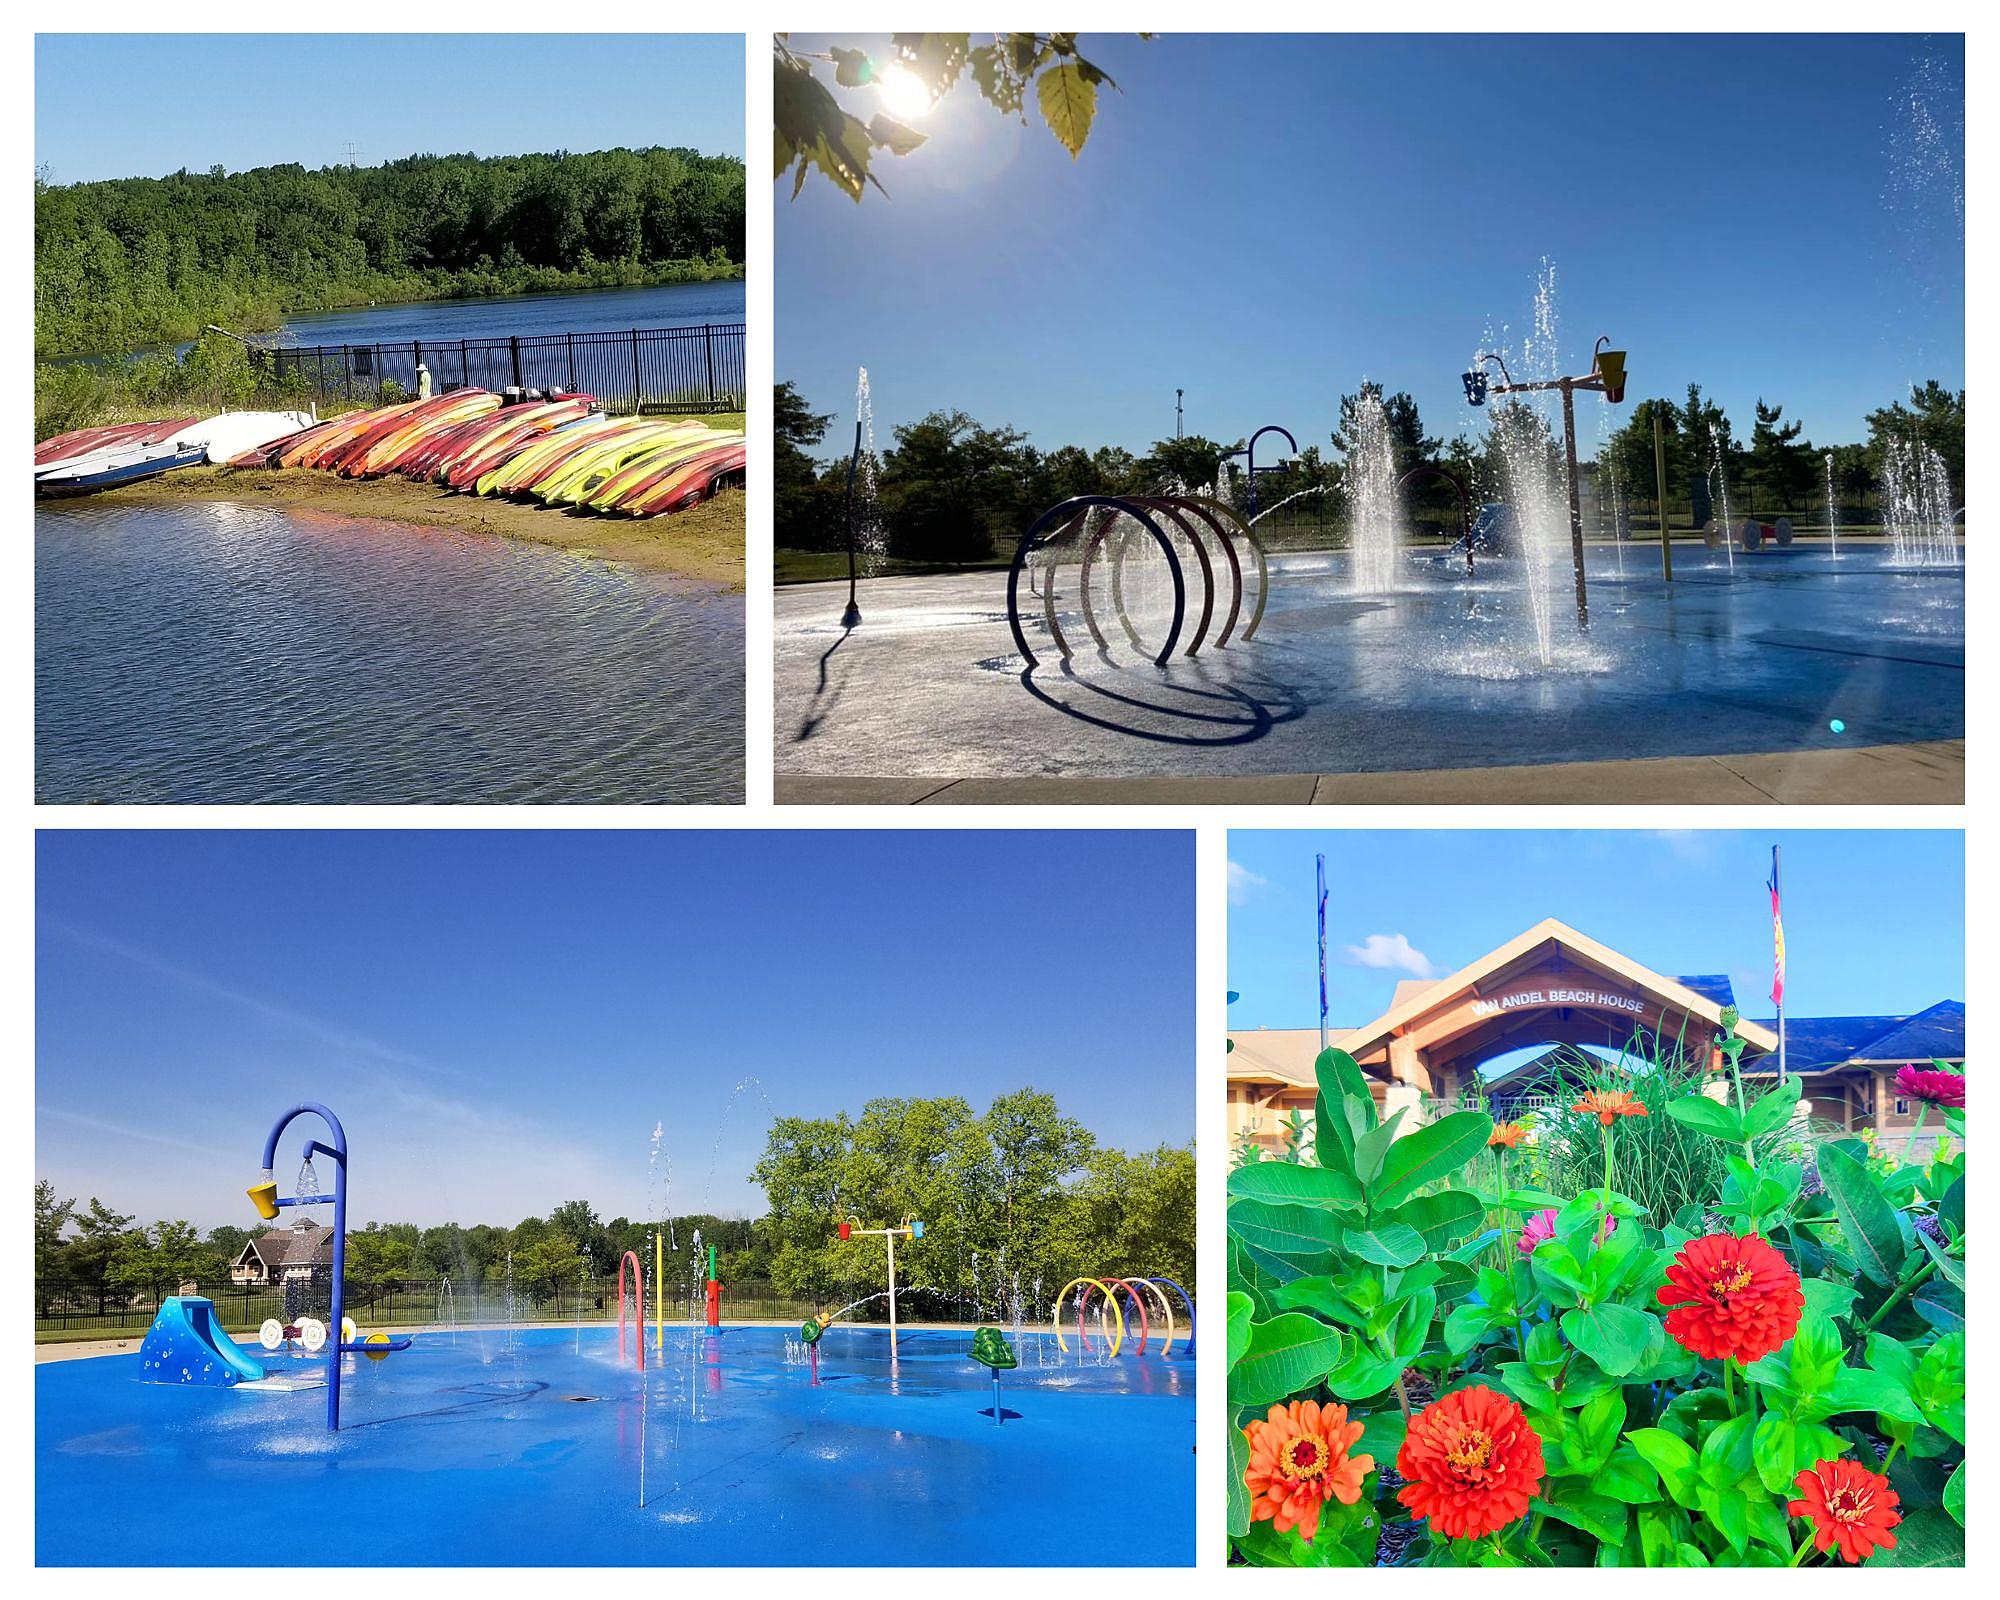 Grand Rapids Millennium Park Splashpad best in U.S.